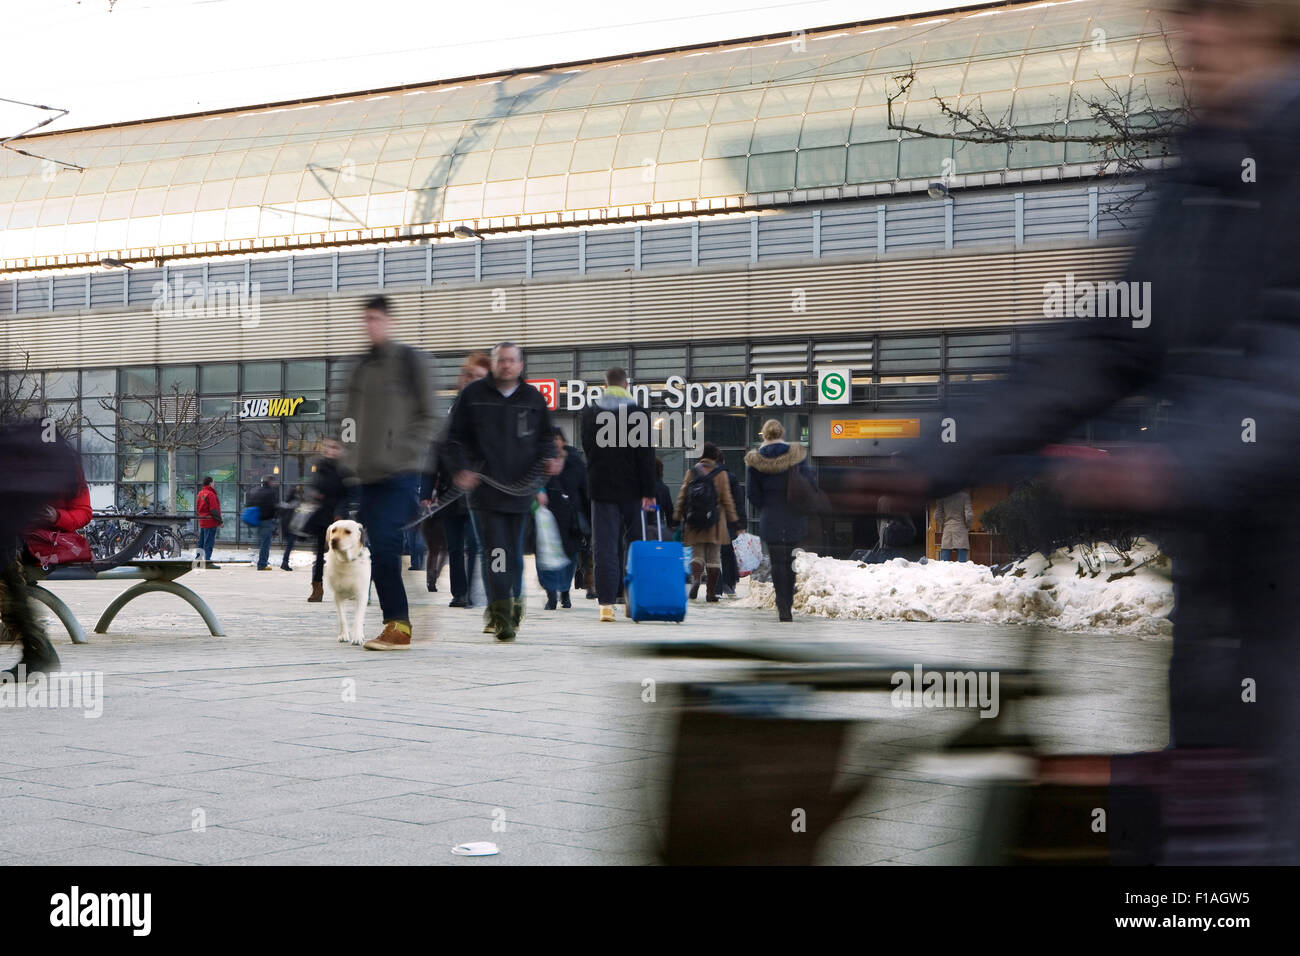 Berlin, Germany, forecourt of the railway station Berlin-Spandau Stock Photo